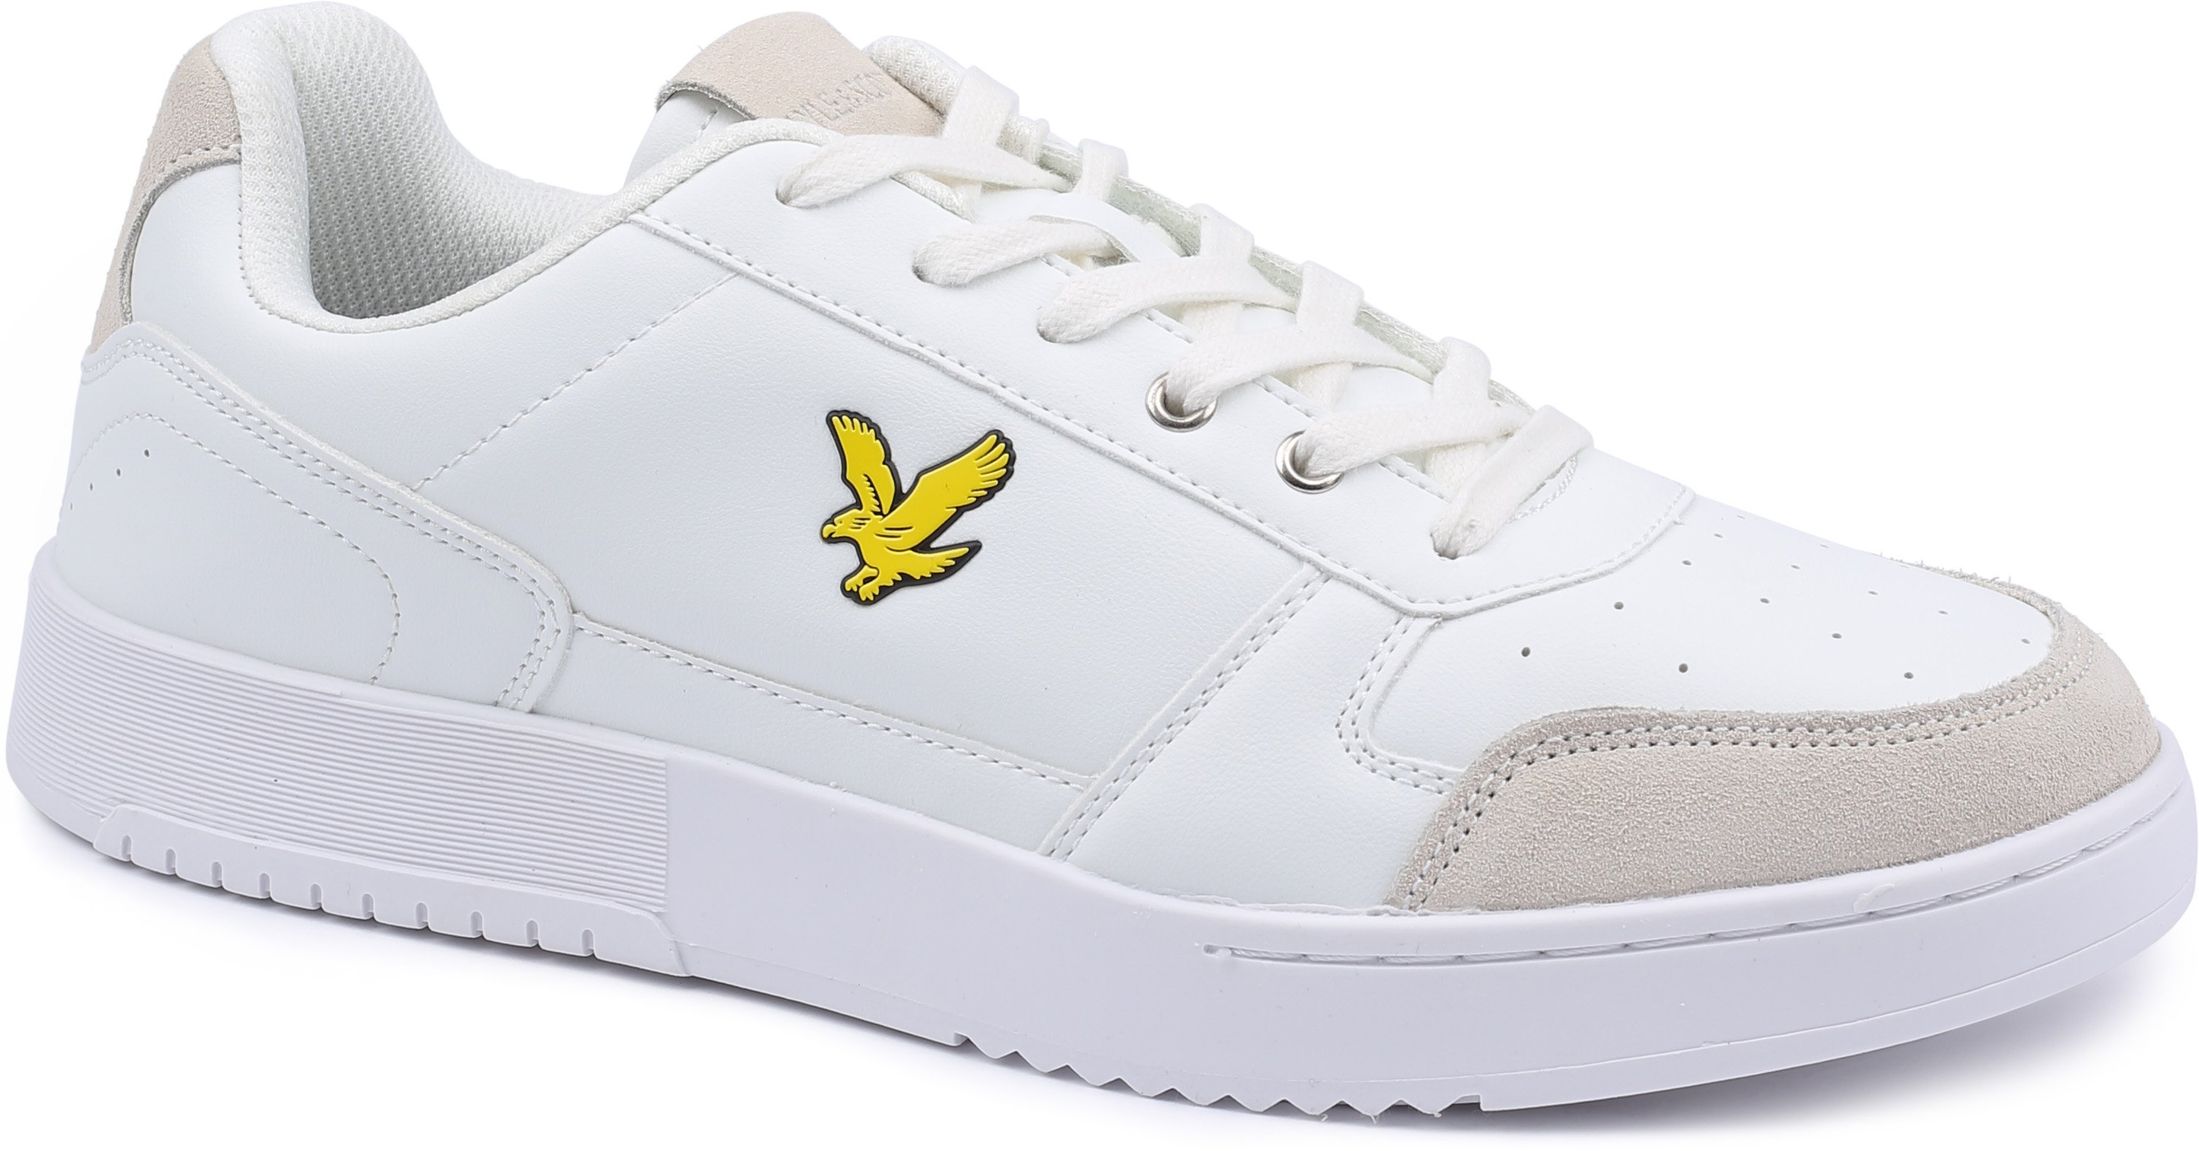 Lyle & Scott Sneaker Shoes Croy White size 11 product